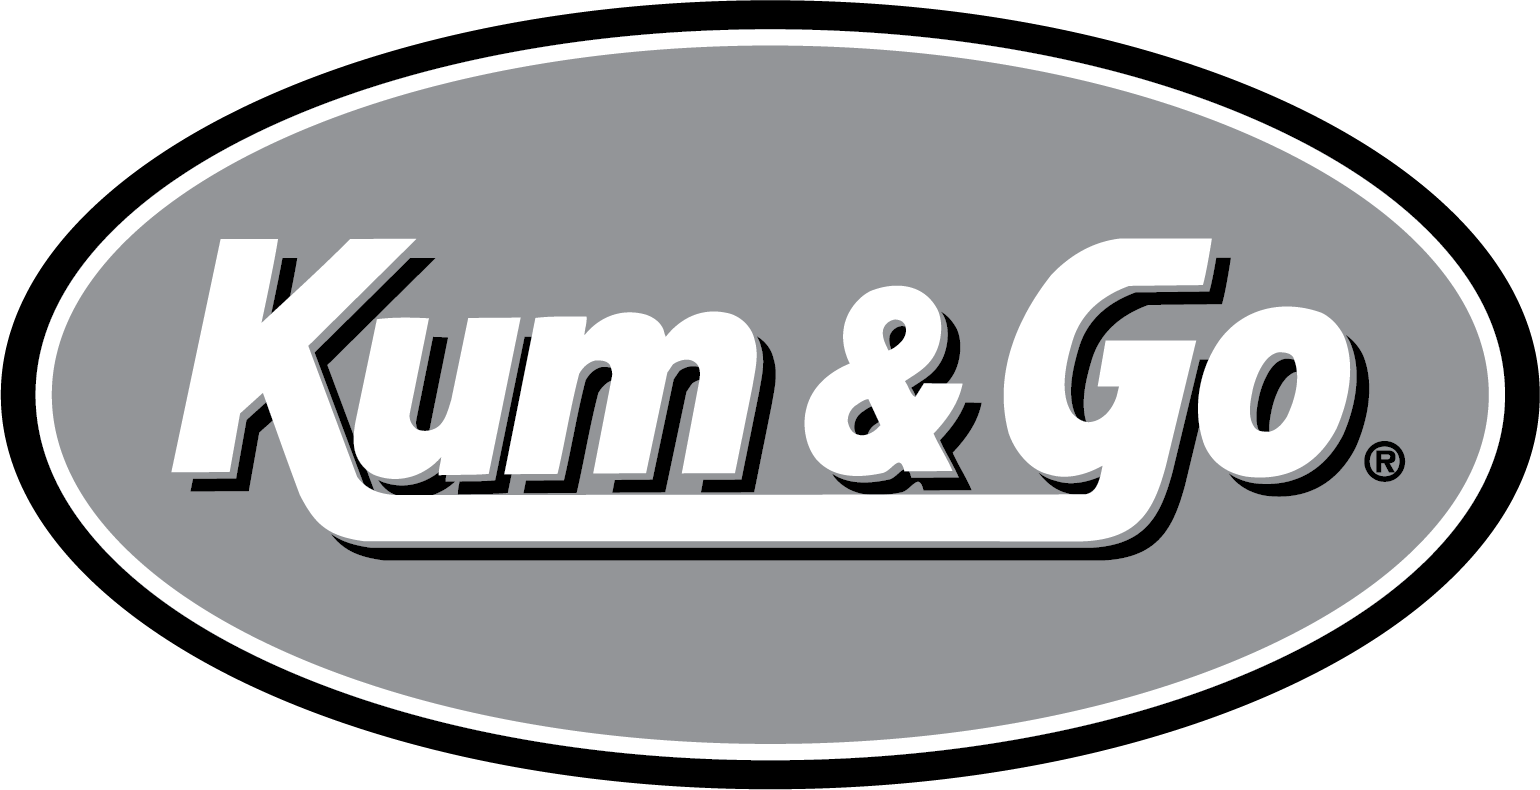 Kum and Go